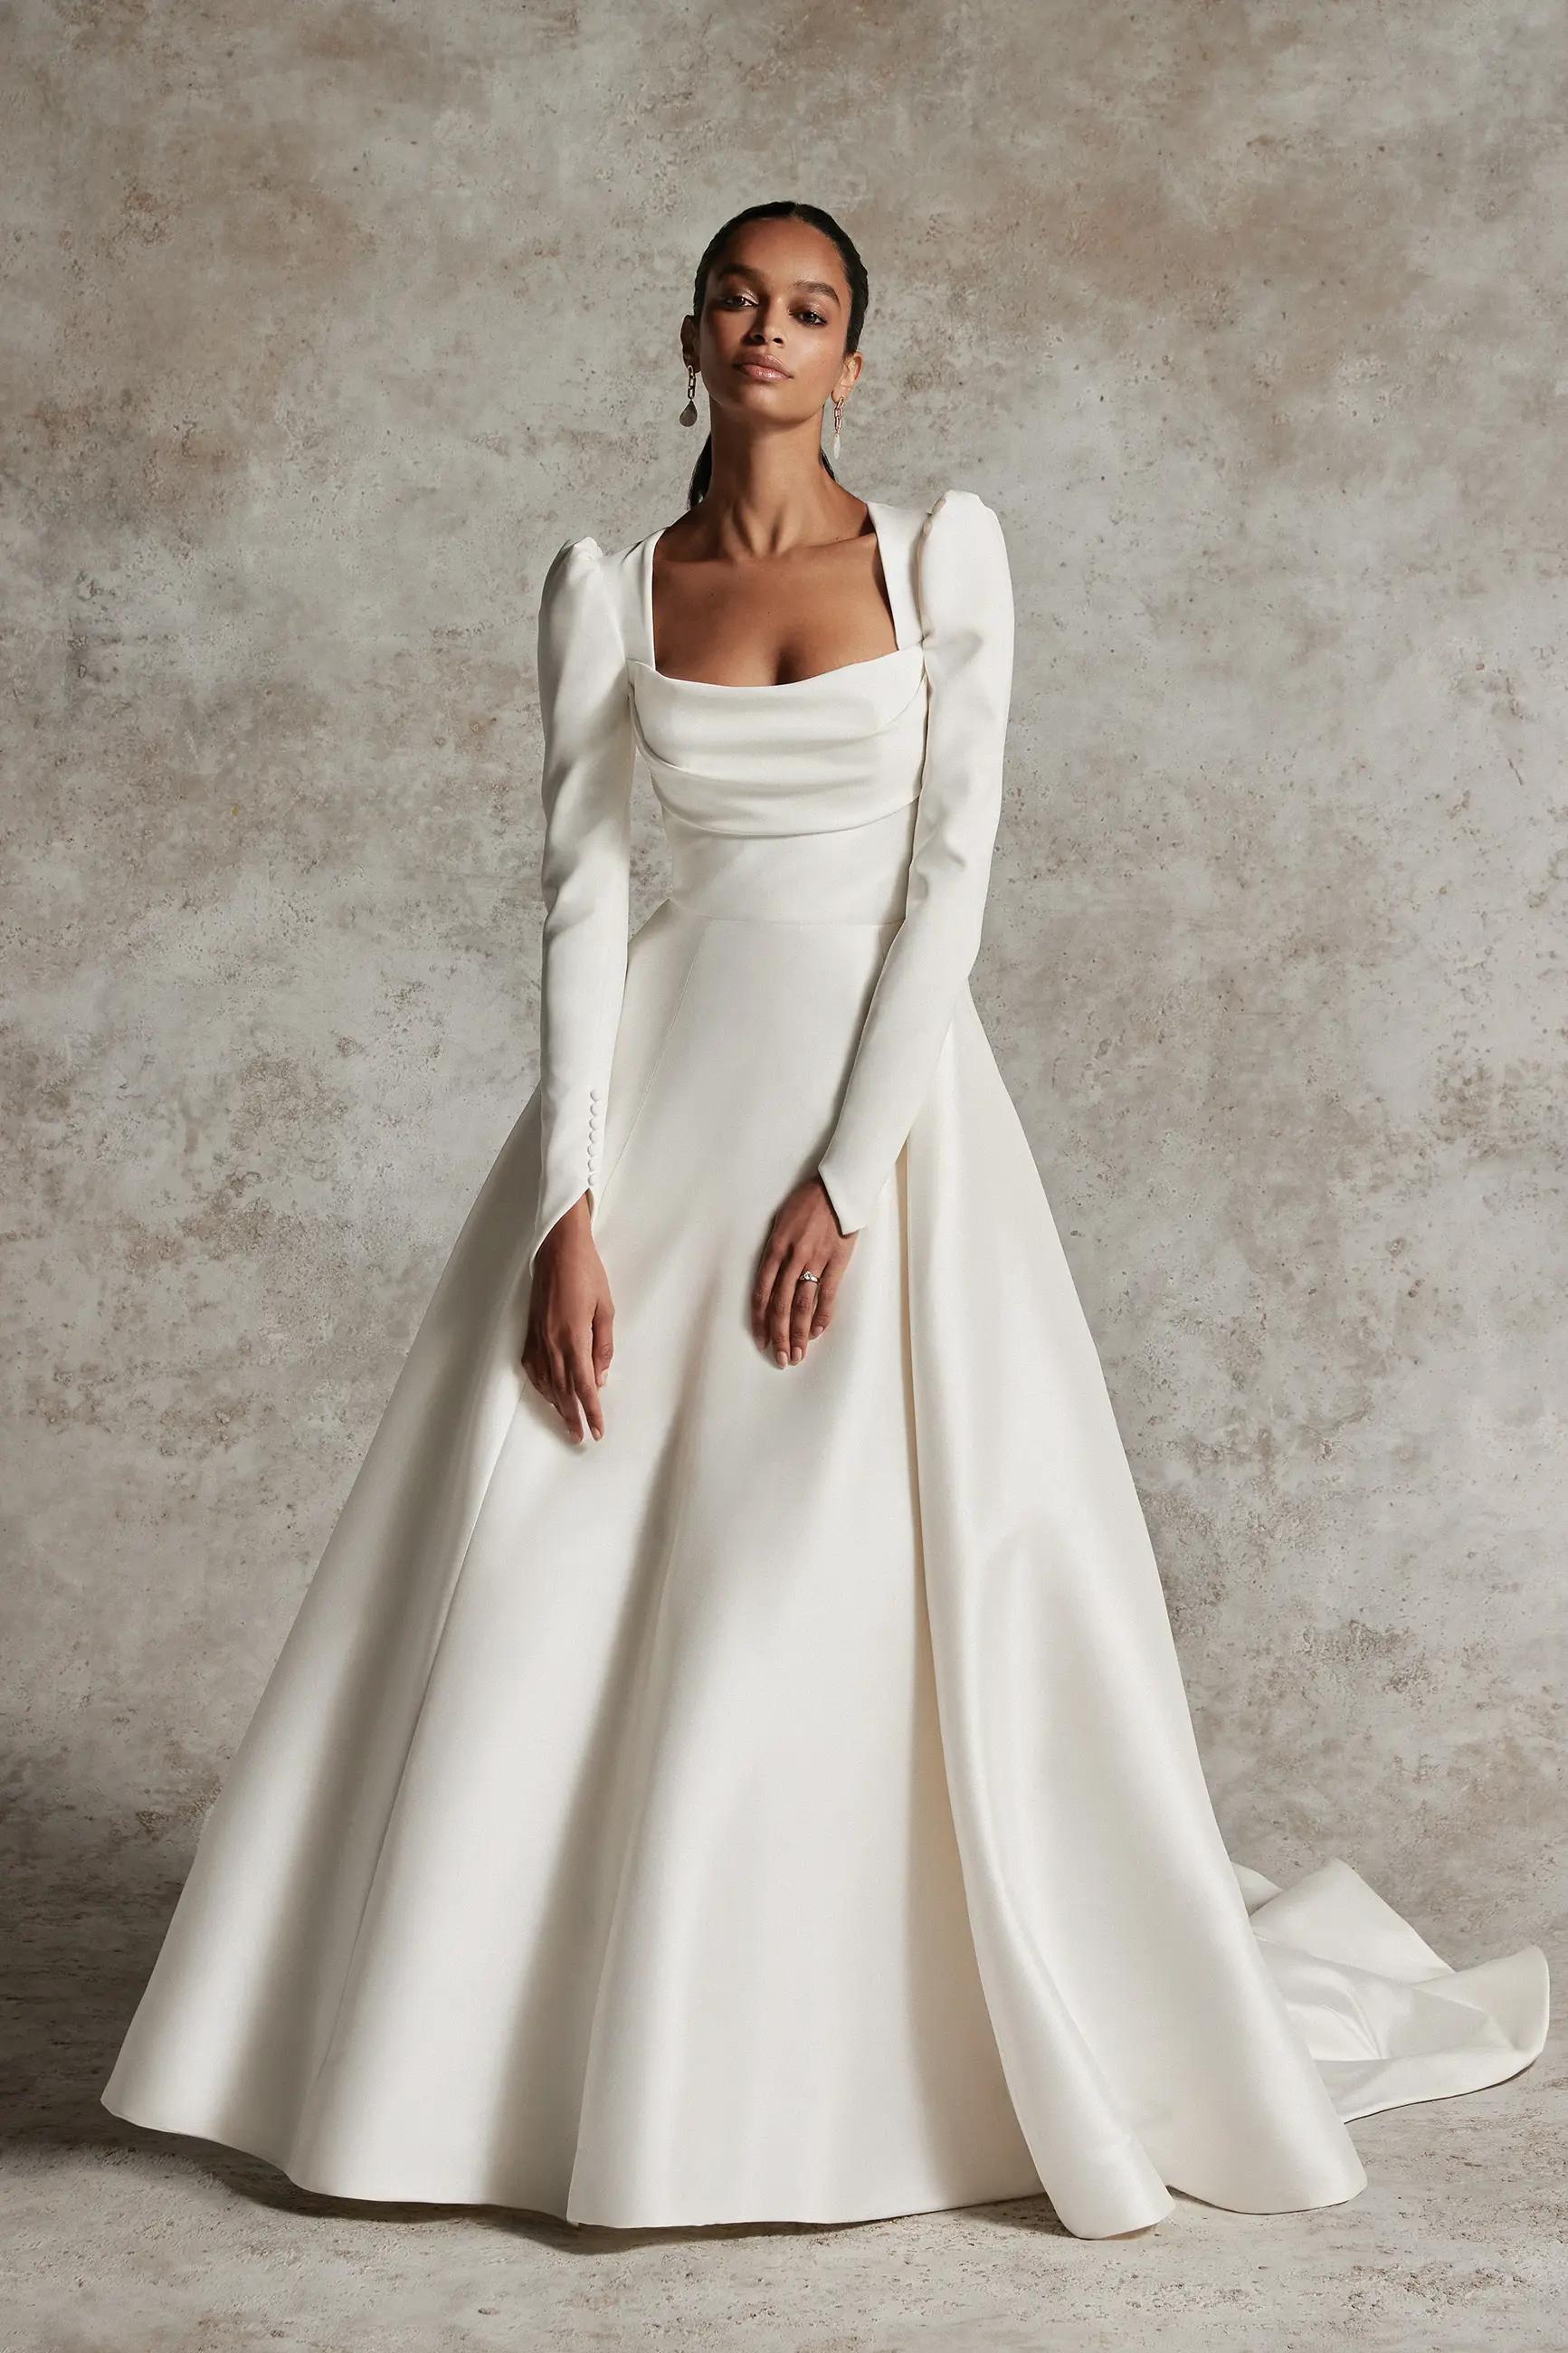 Sleeves of Elegance: Embracing Long Sleeves in December Bridal Fashion. Desktop Image